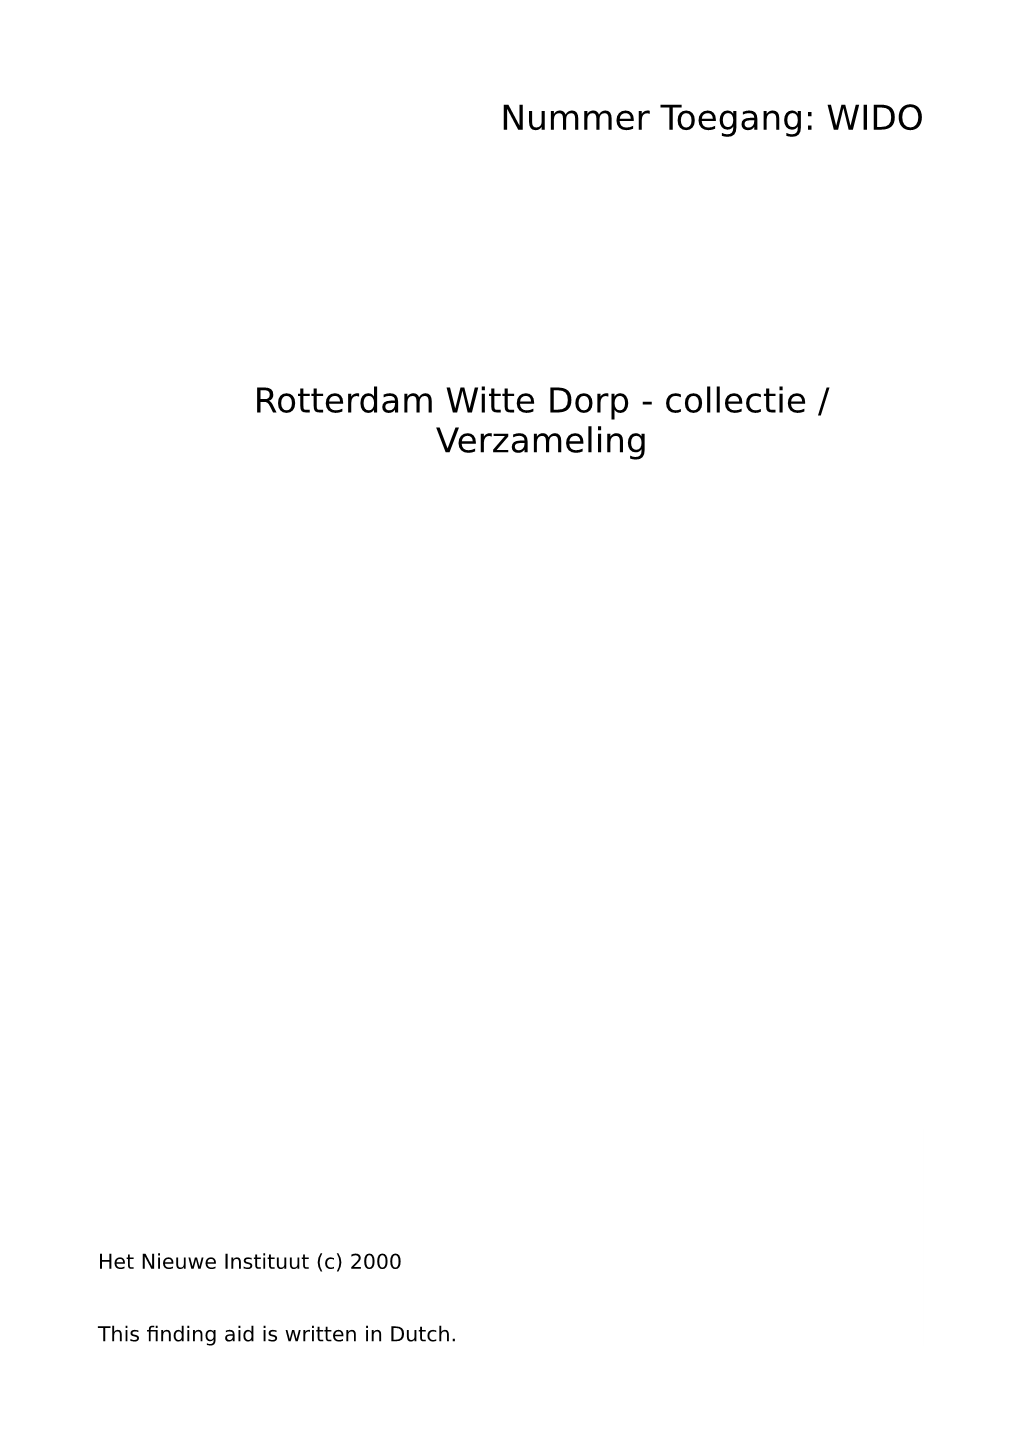 WIDO Rotterdam Witte Dorp - Collectie / Verzameling 3